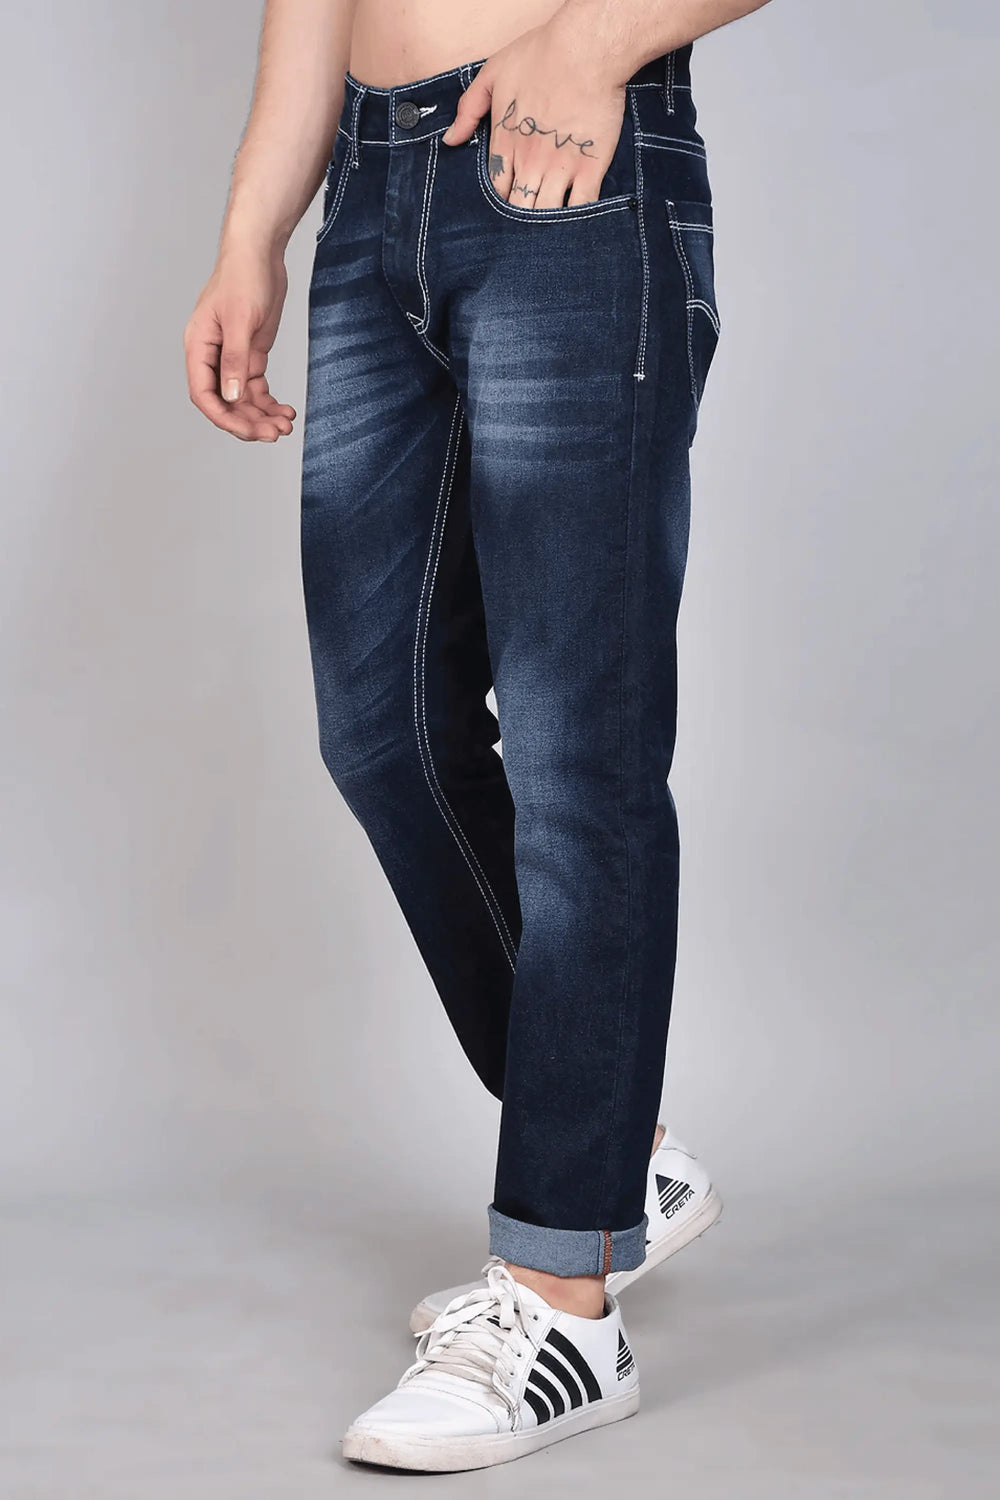 Slim Fit Shade Bright Blue Denim Jeans For men - Peplos Jeans 